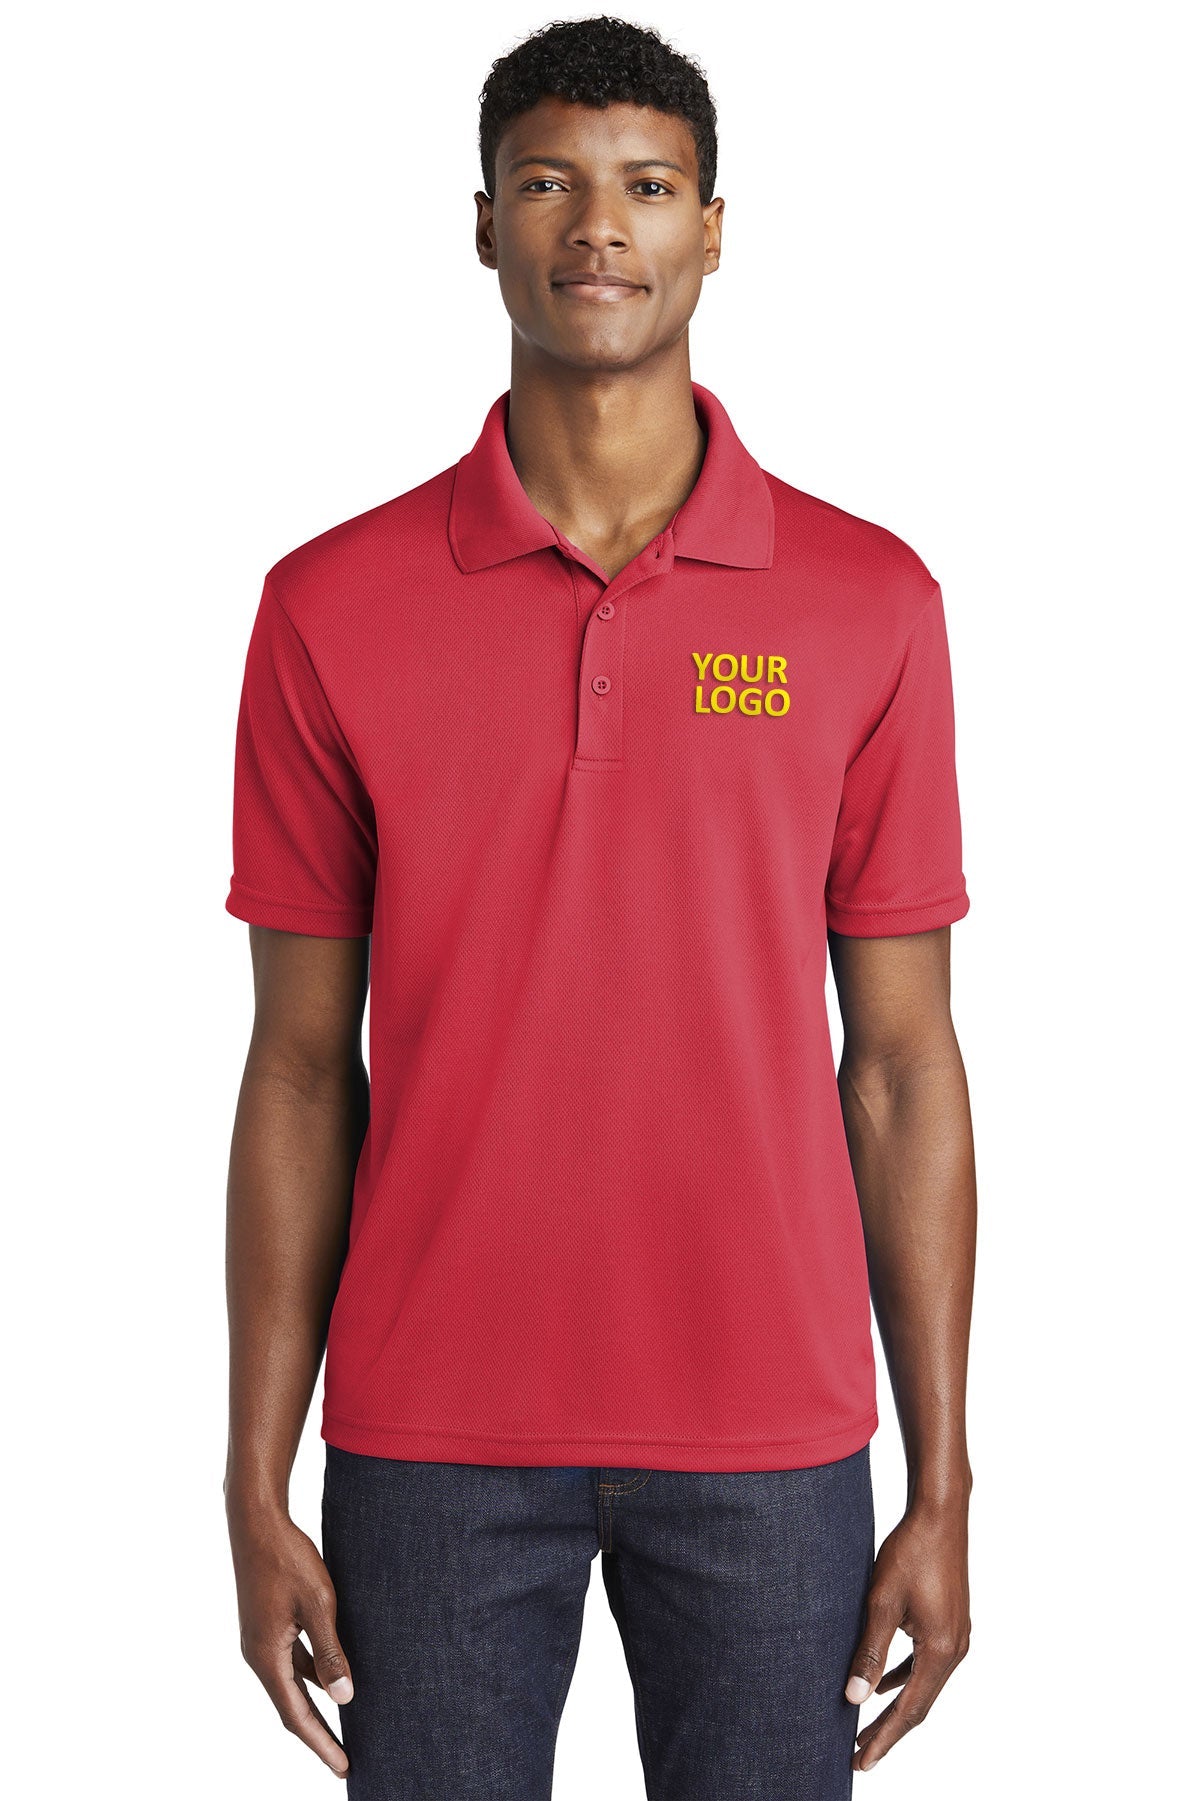 Sport-Tek True Red ST640 polo shirts company logo